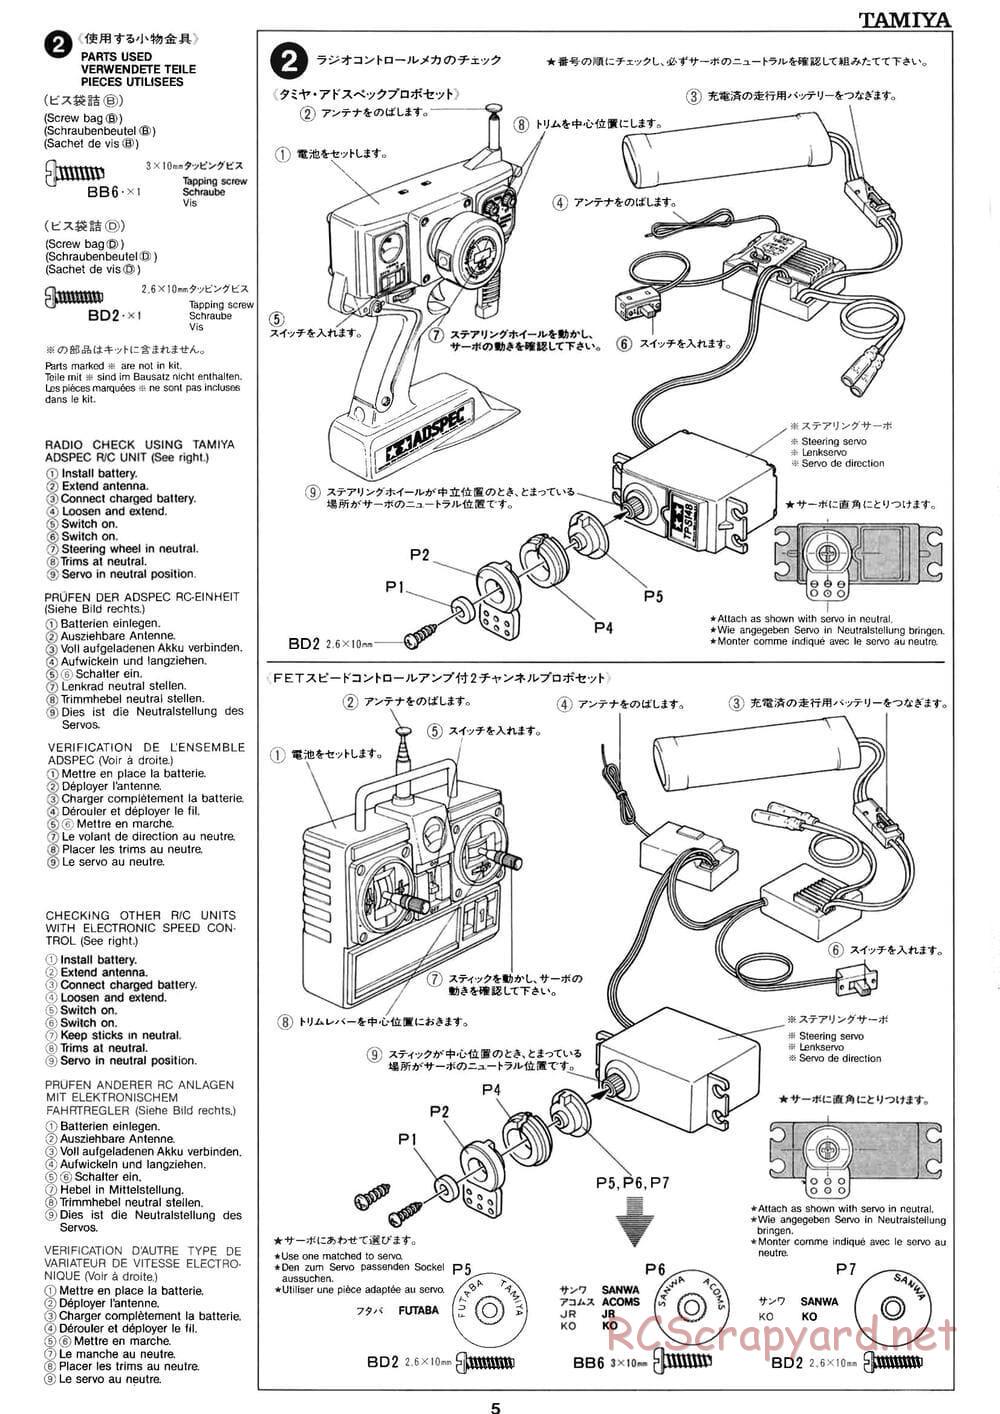 Tamiya - Group-C Chassis - Manual - Page 5